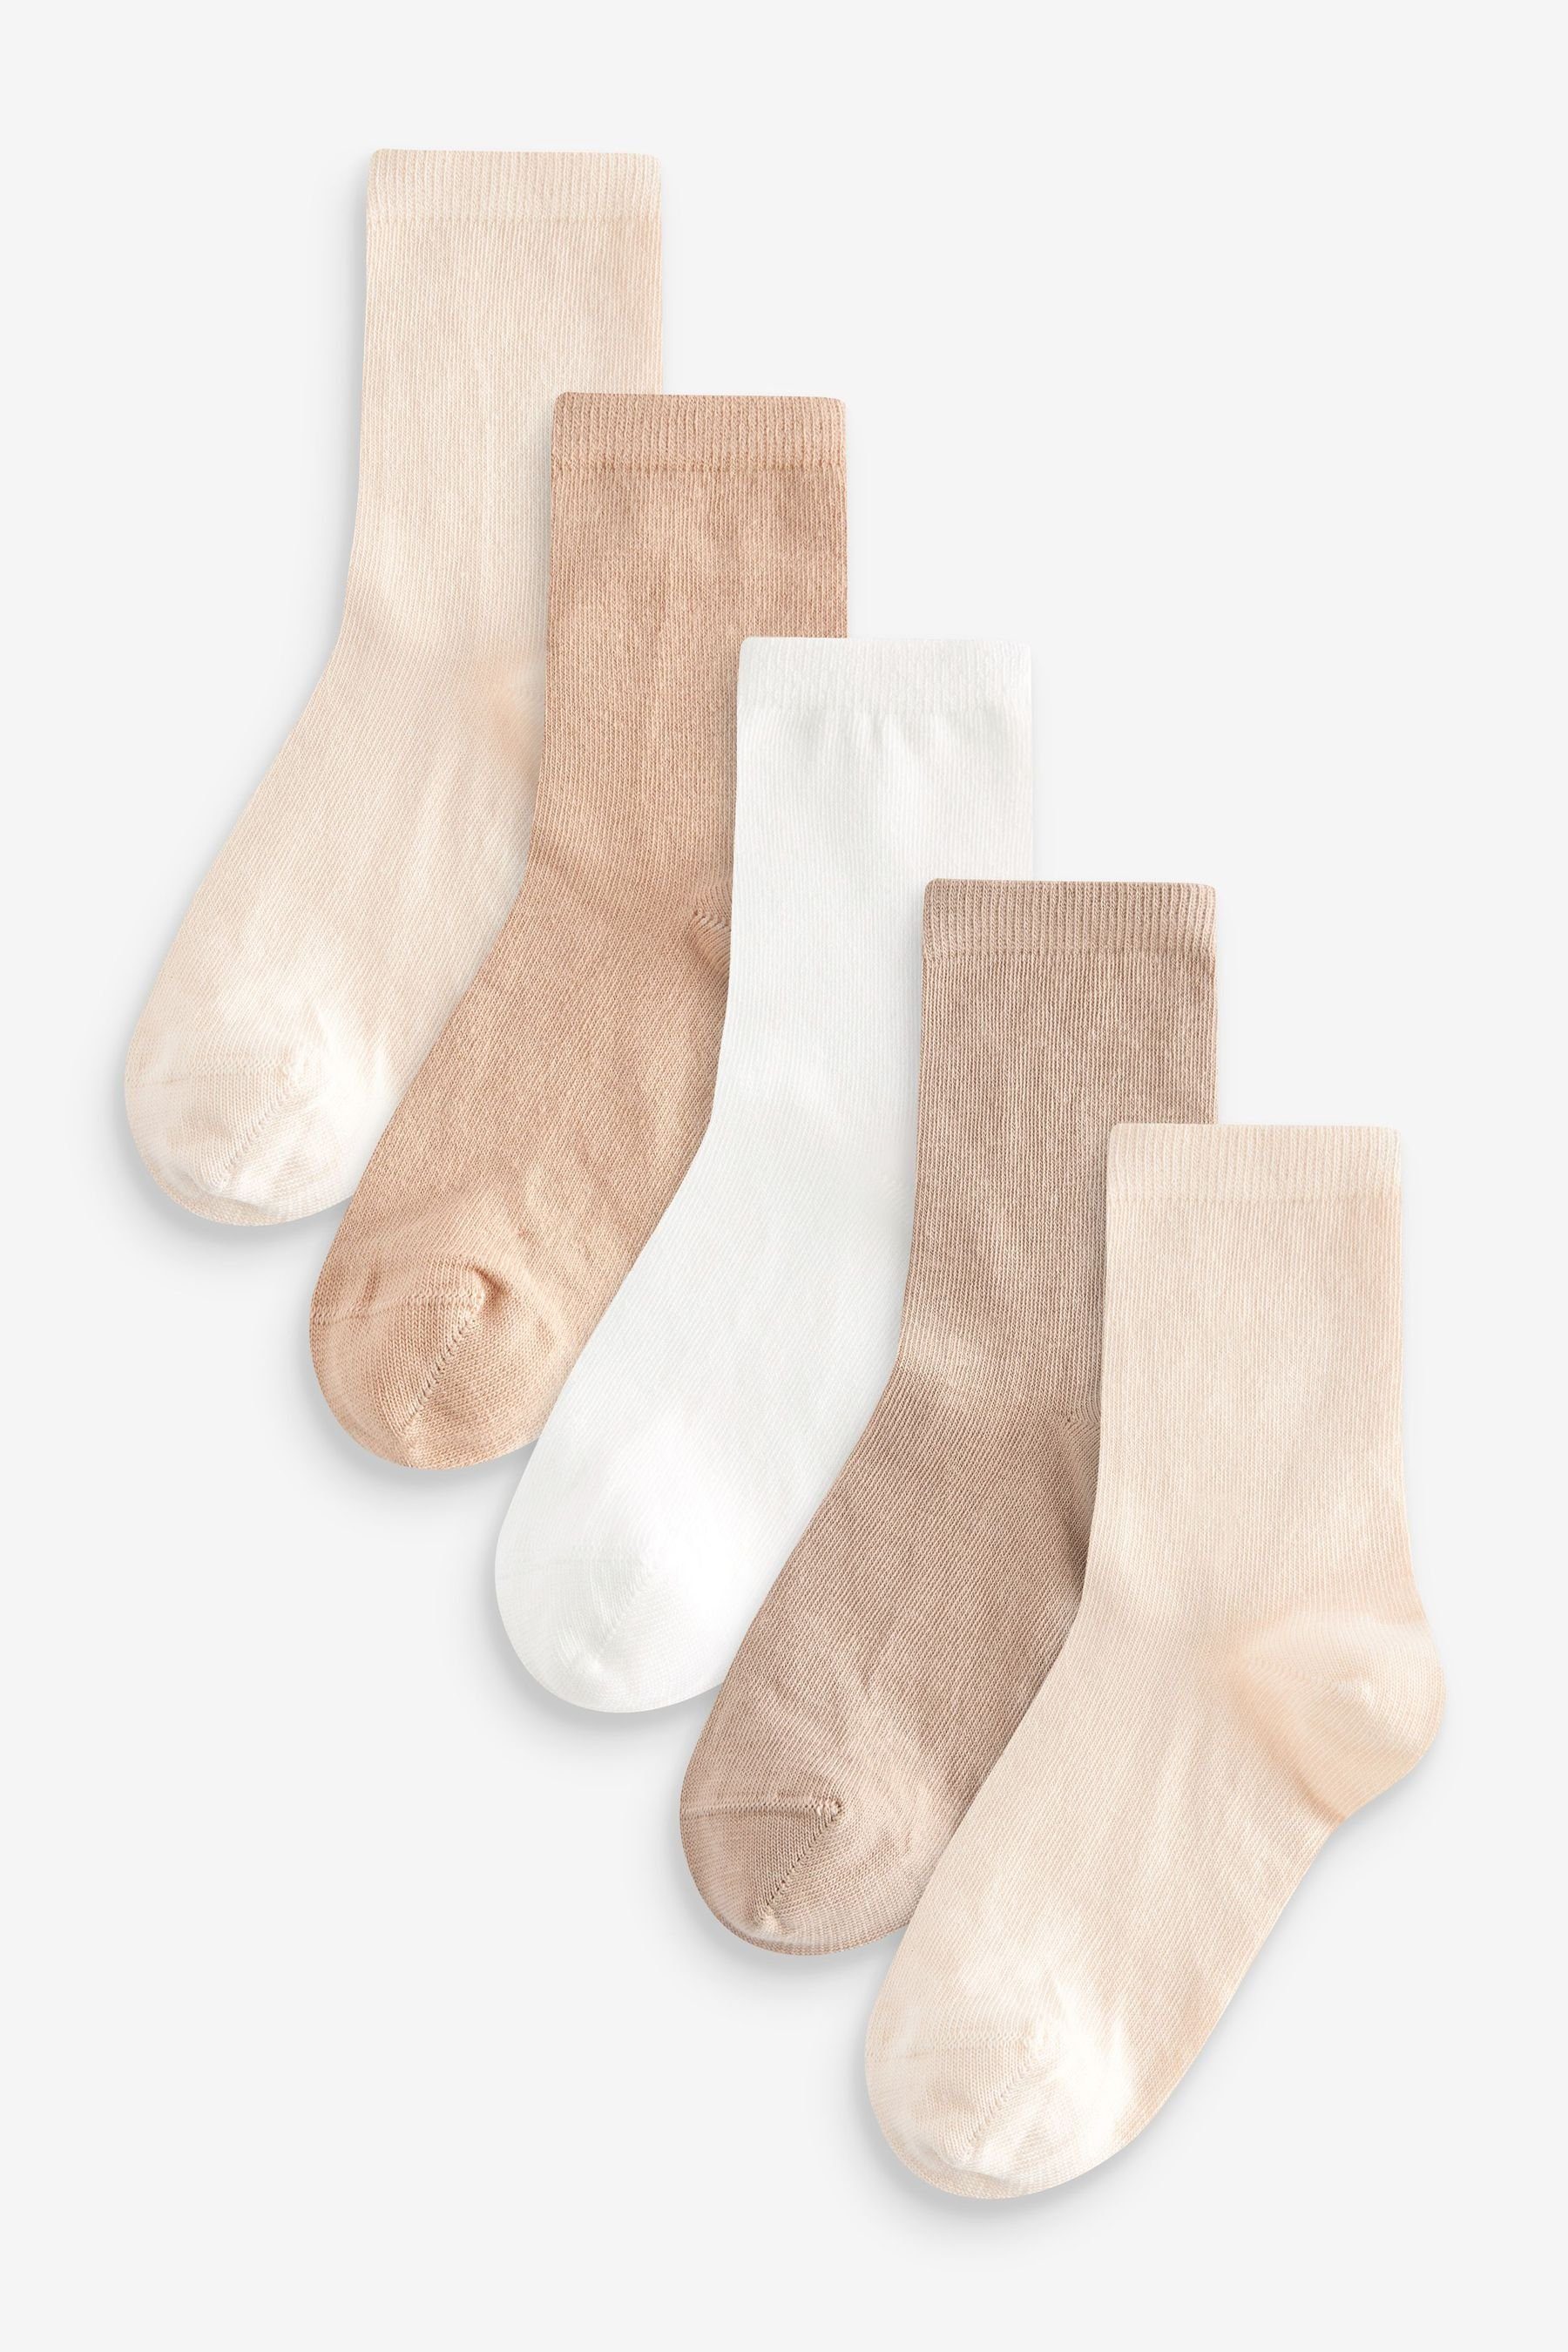 (5-Paar) mit Socken Next 5er-Pack Kurzsocken hohem im Baumwollanteil